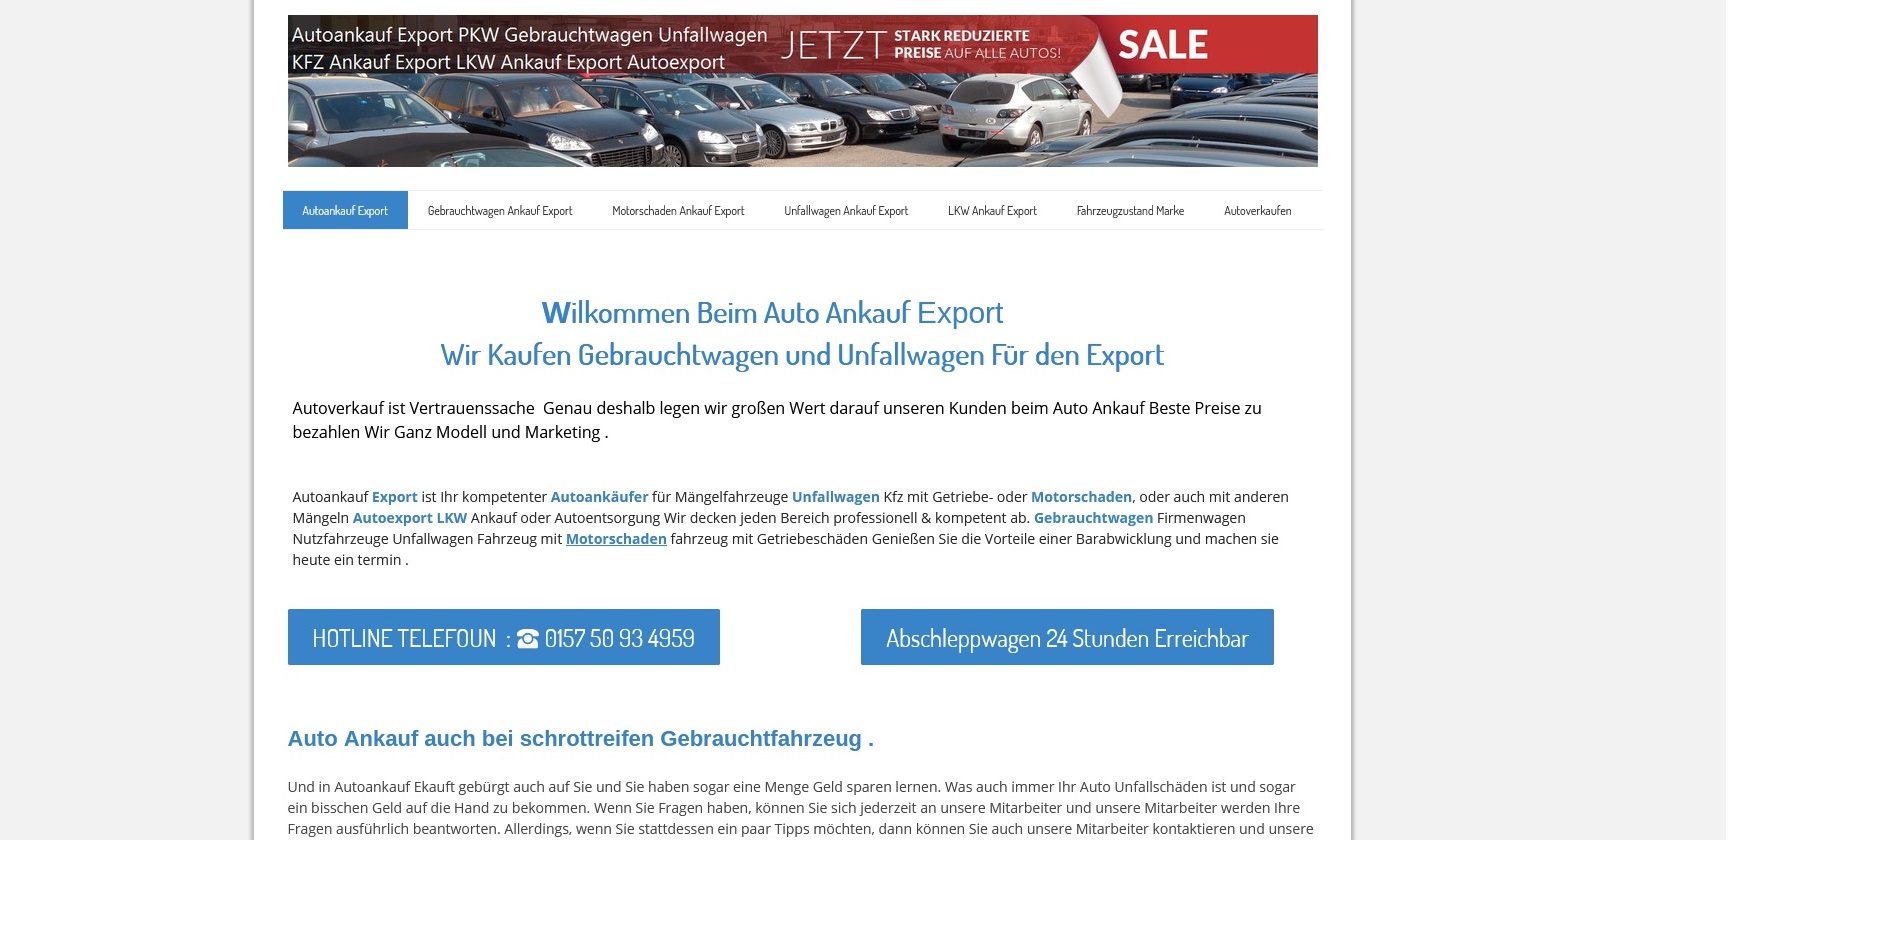 Kfz-Ankauf-export.de | Autoankauf Bremerhaven | Autoankauf Export Bremerhaven